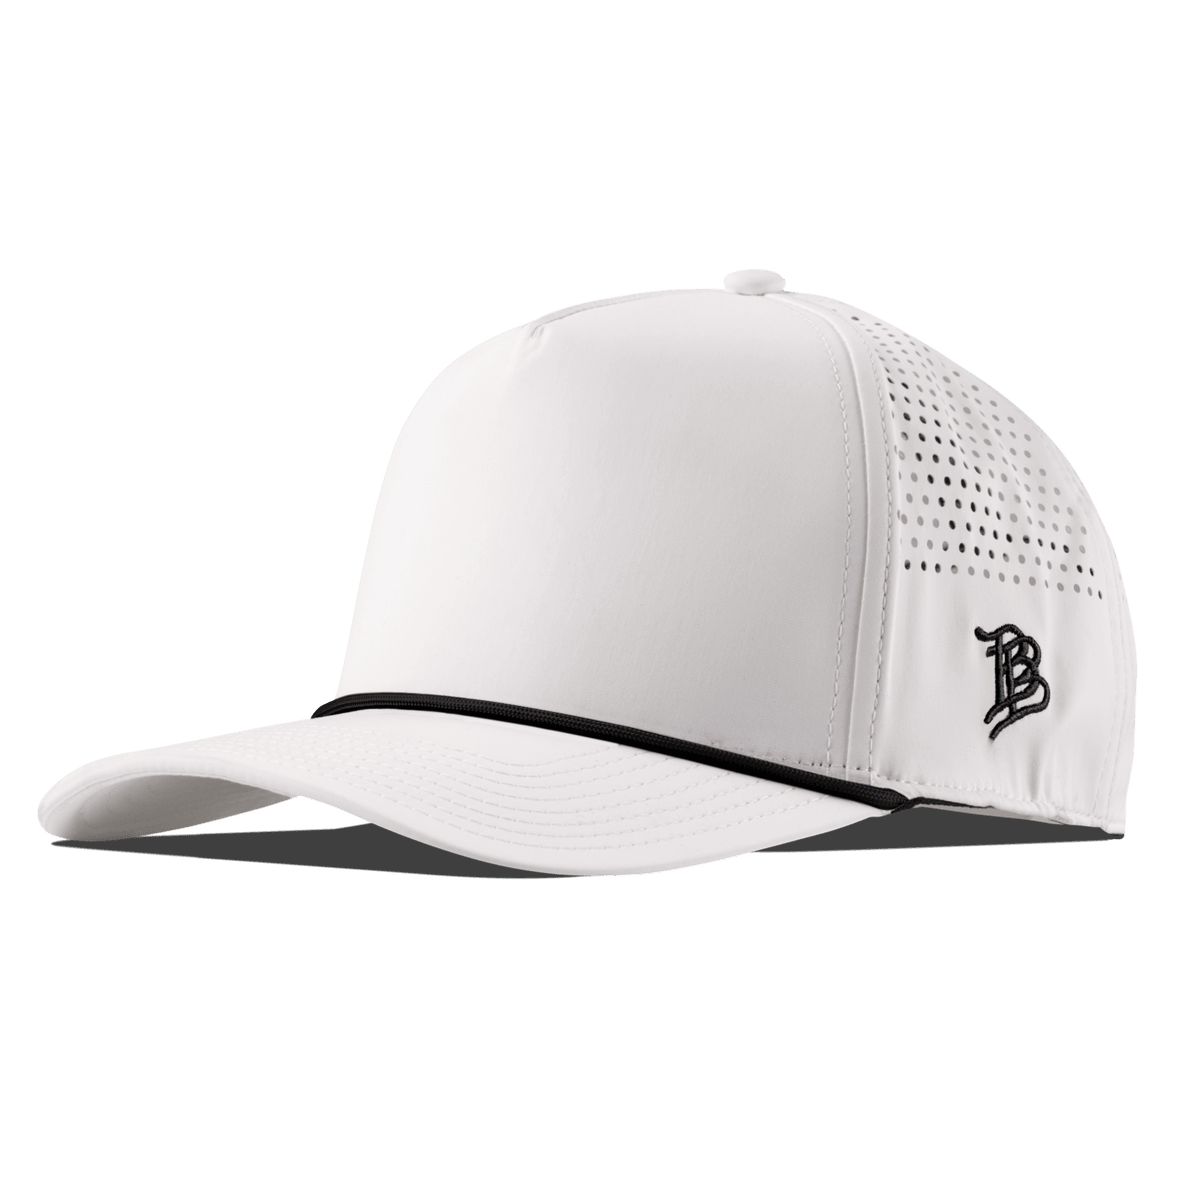 Retro Rope 5 Panel Performance Cap | Golf Headwear & Apparel